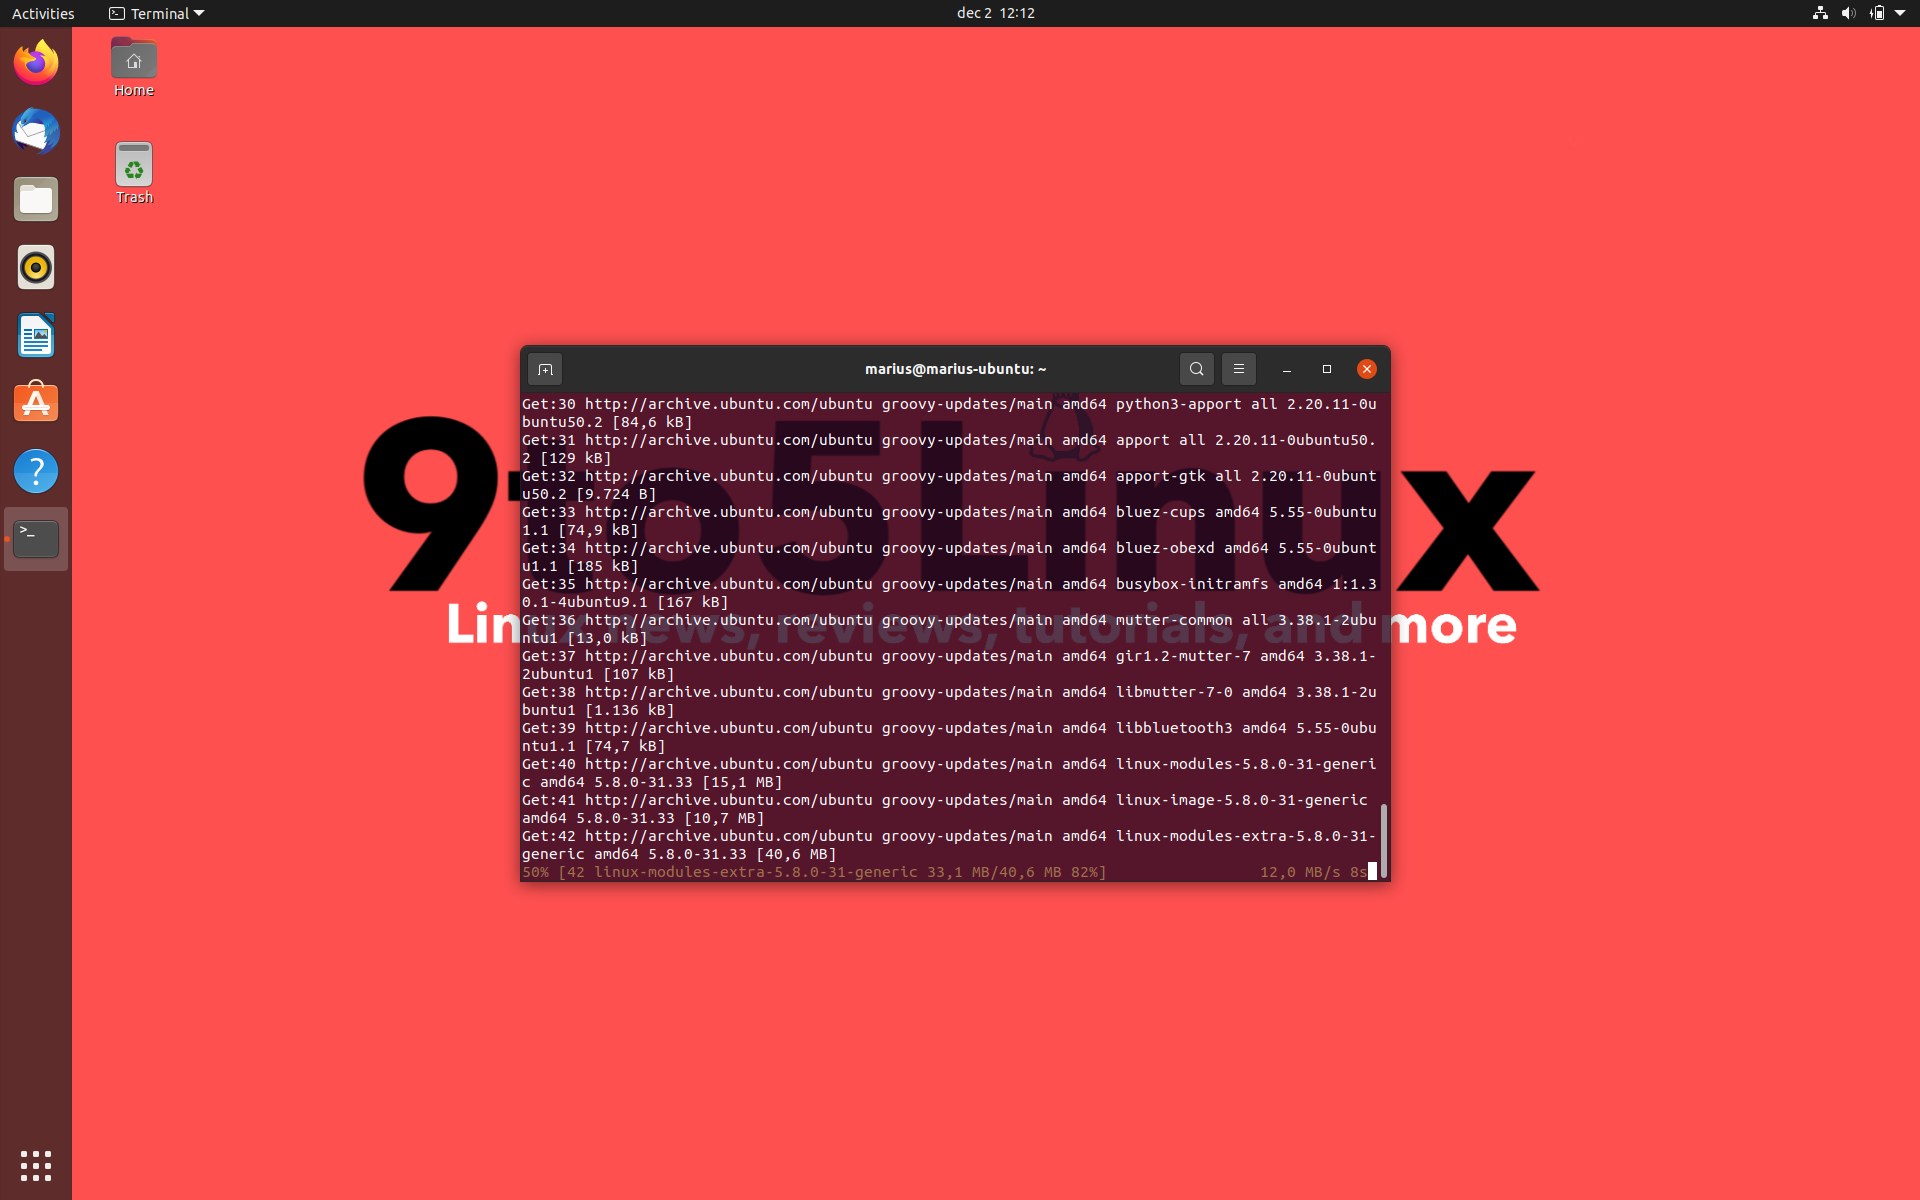 Ubuntu 6192-1: Linux kernel vulnerabilities